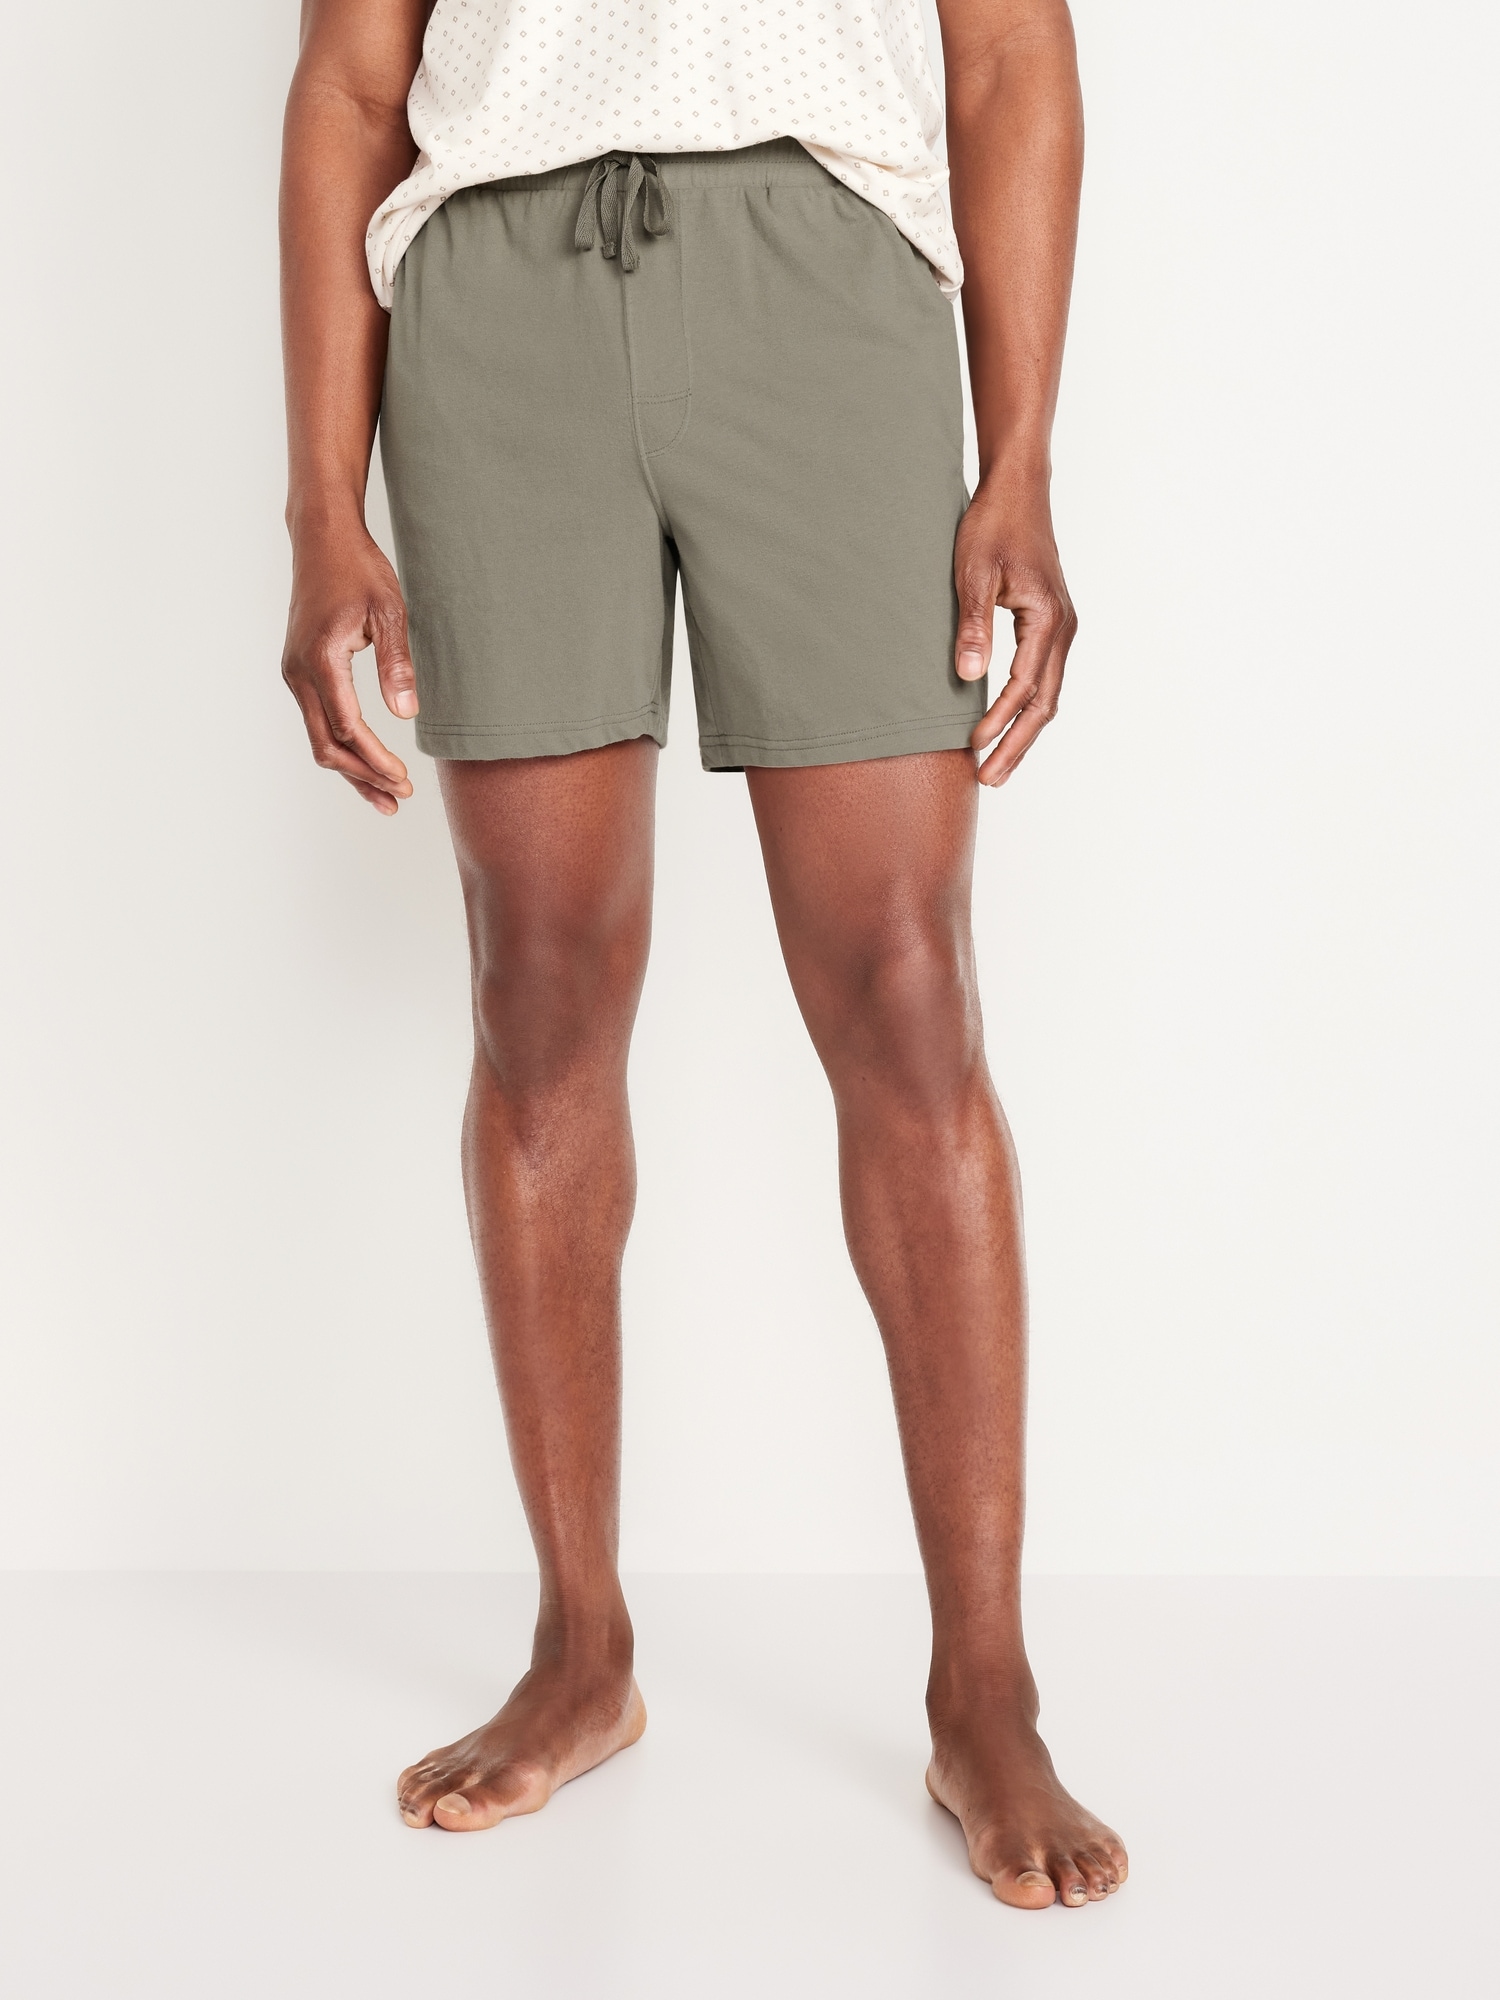 Jersey Pajama Shorts - 6-inch inseam